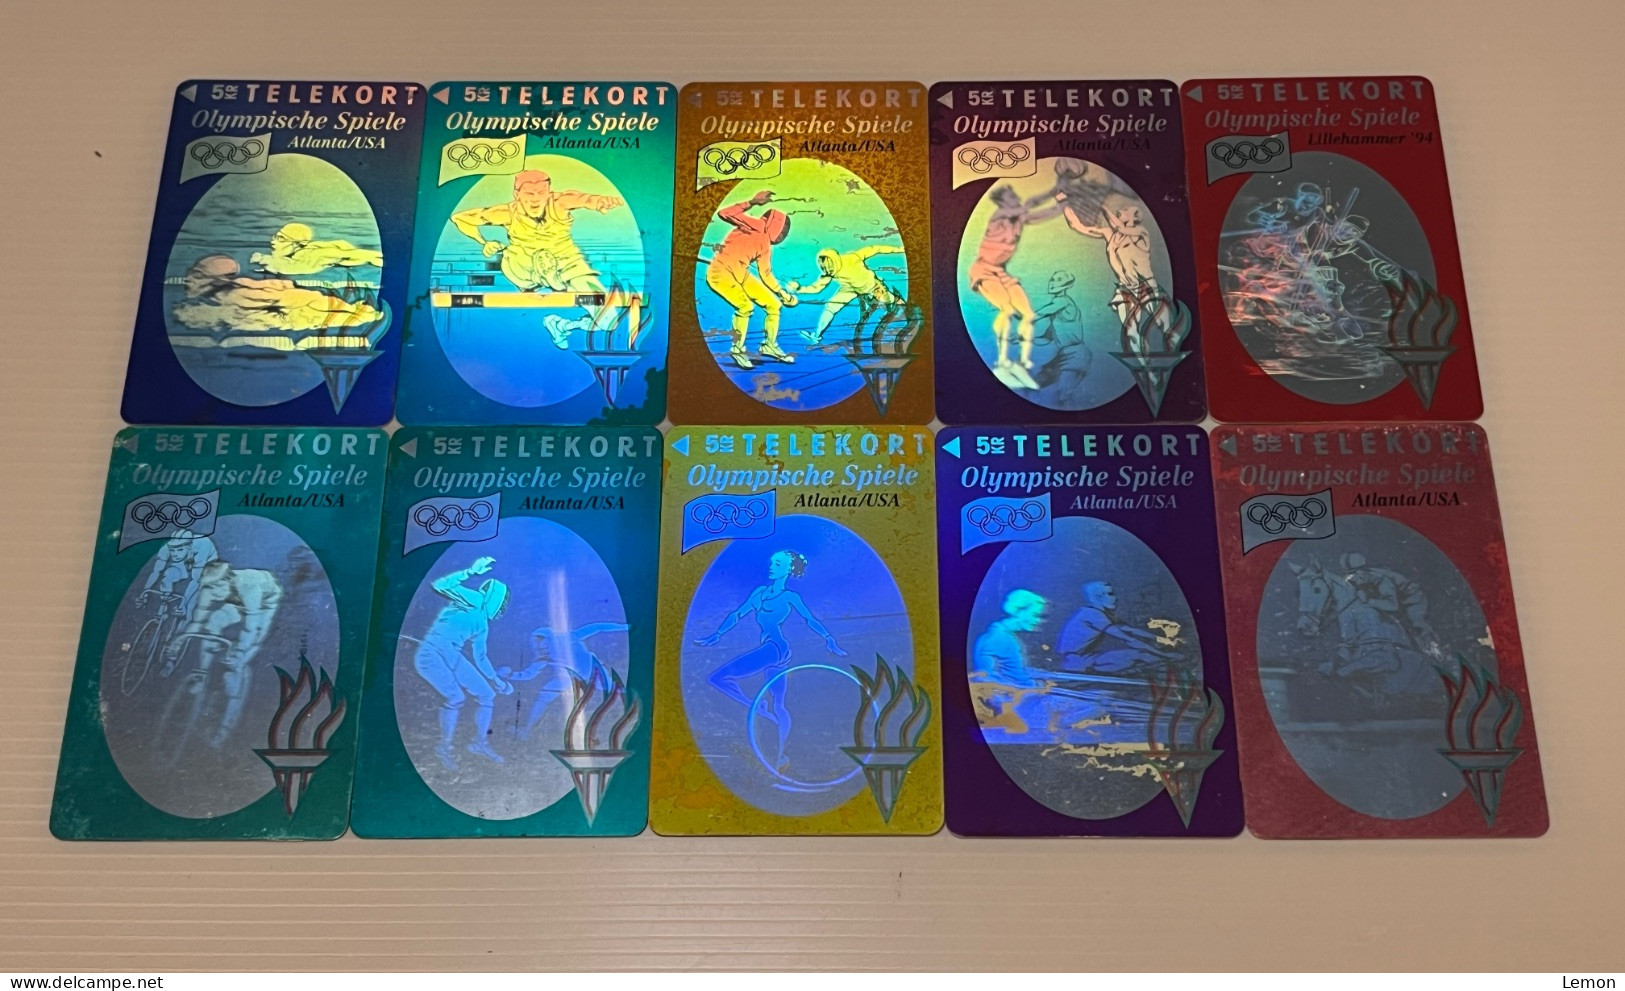 Mint Denmark / Danmark Phonecard, Hologram Atlanta Olympic USA - Olympische Spiele, Set Of 10 Mint Cards - Denemarken